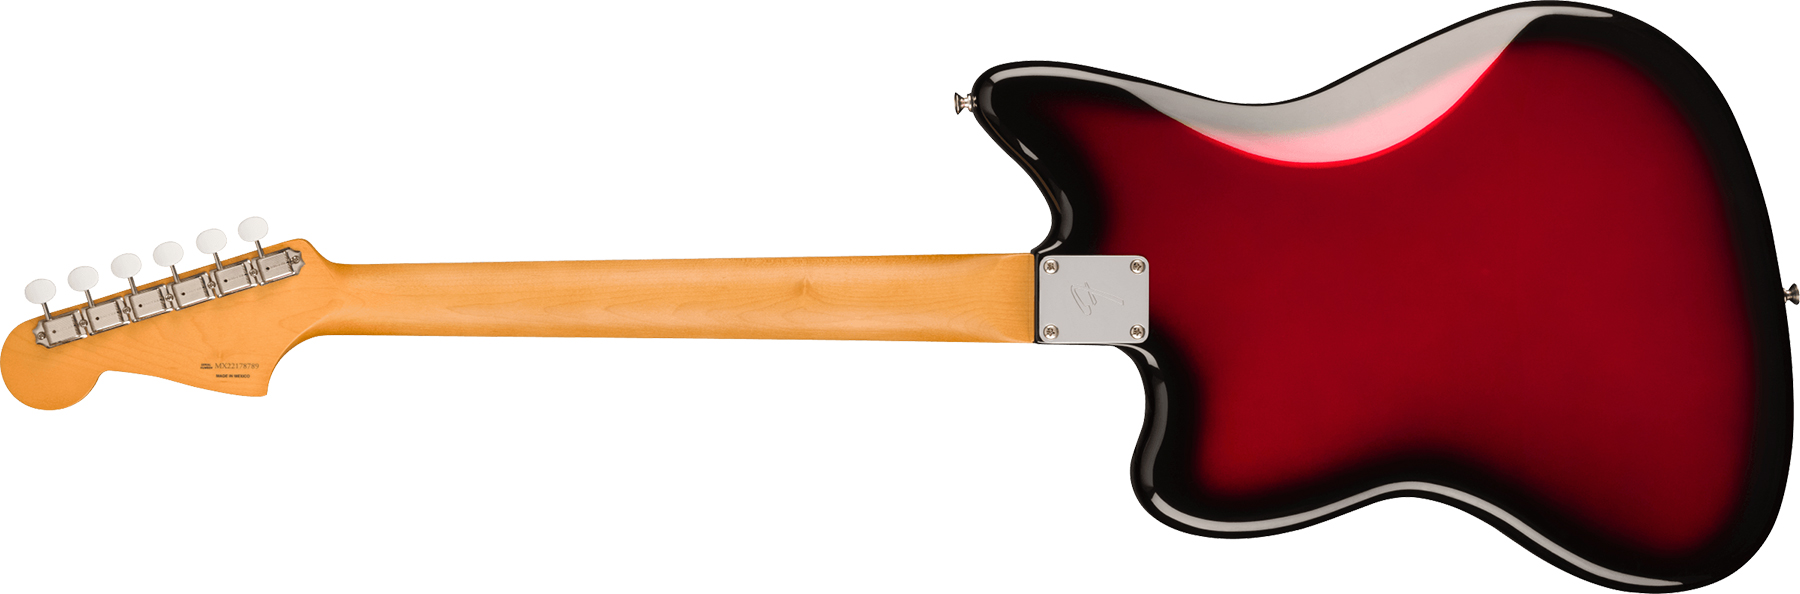 Fender Jazzmaster Gold Foil Ltd Mex 3mh Trem Bigsby Eb - Candy Apple Burst - Guitarra electrica retro rock - Variation 1